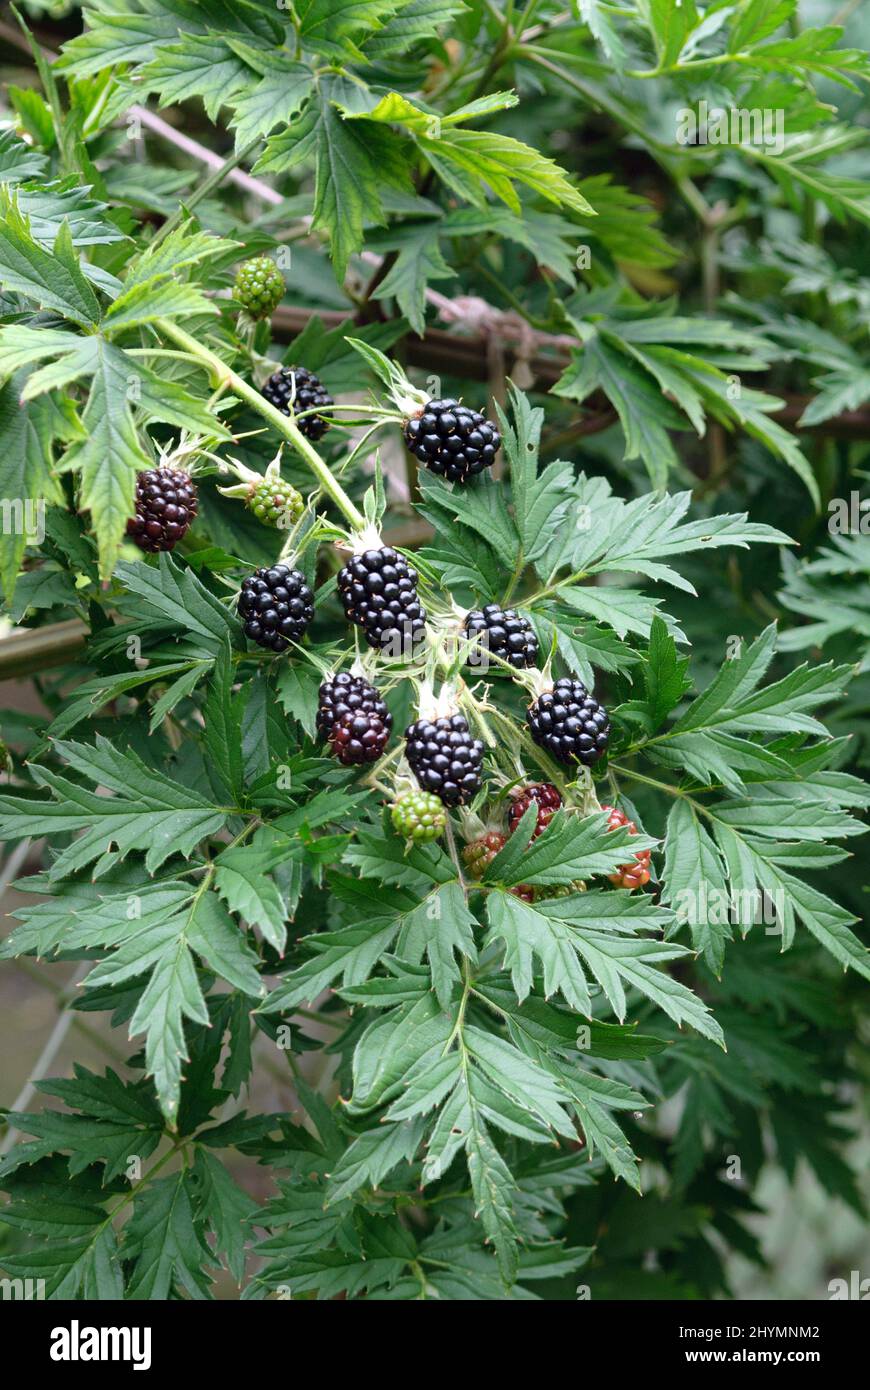 shrubby blackberry (Rubus fruticosus 'Thornless Evergreen', Rubus fruticosus Thornless Evergreen), fruits on a branch, cultivar Thornless Evergreen Stock Photo